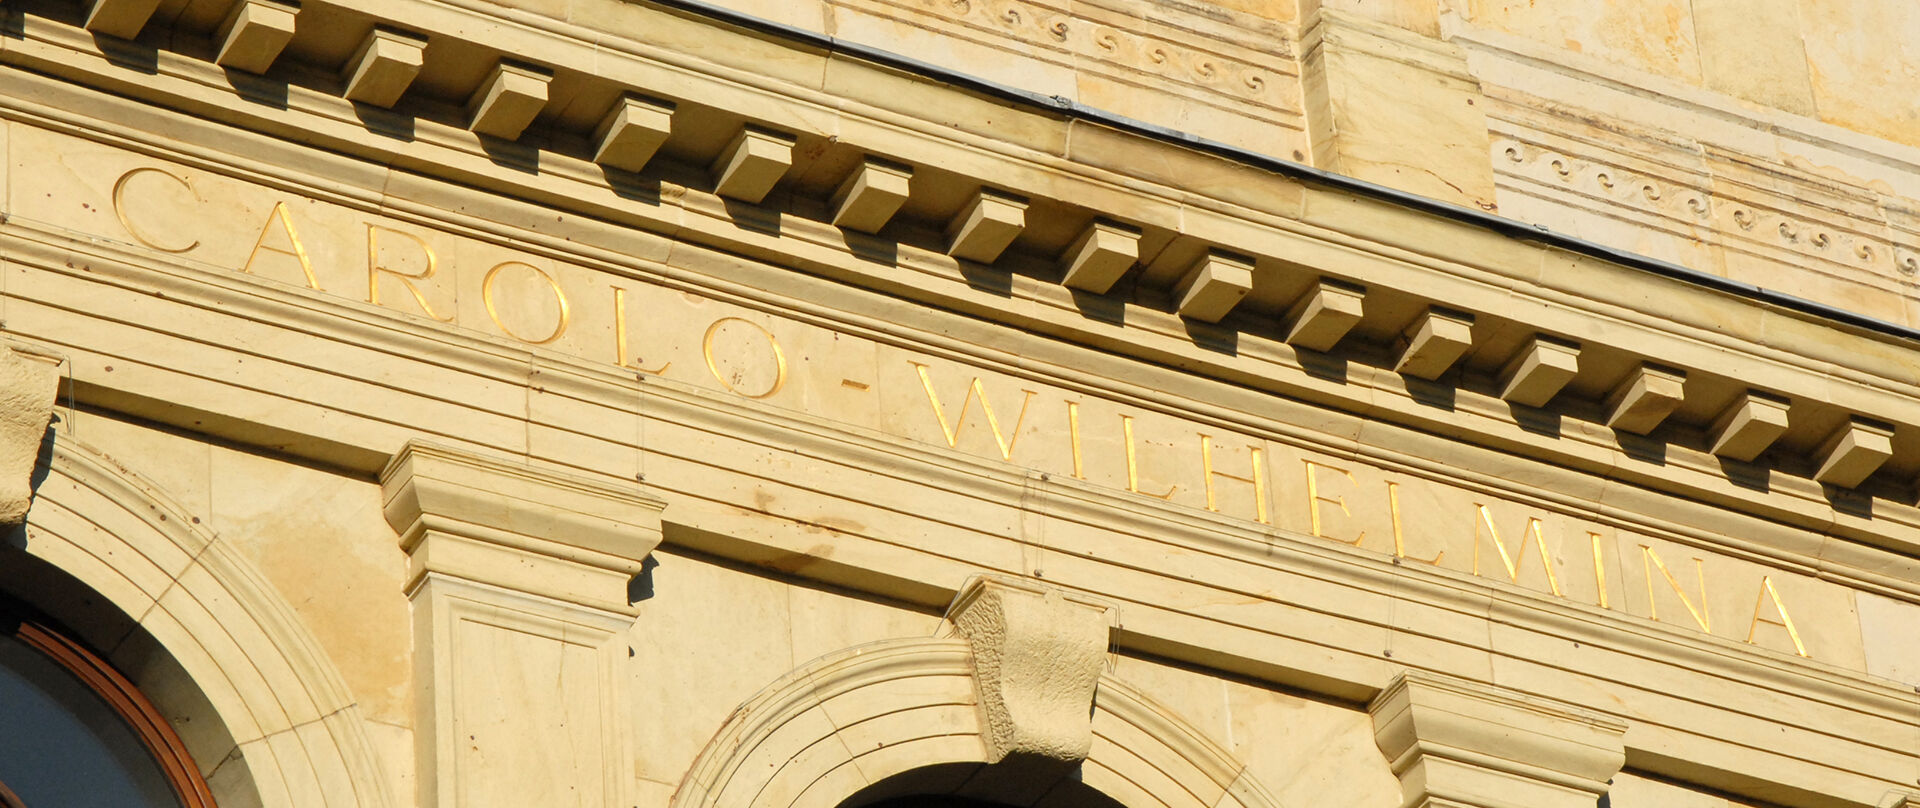 Carolo-Wilhelmina writing on the Old Main Building